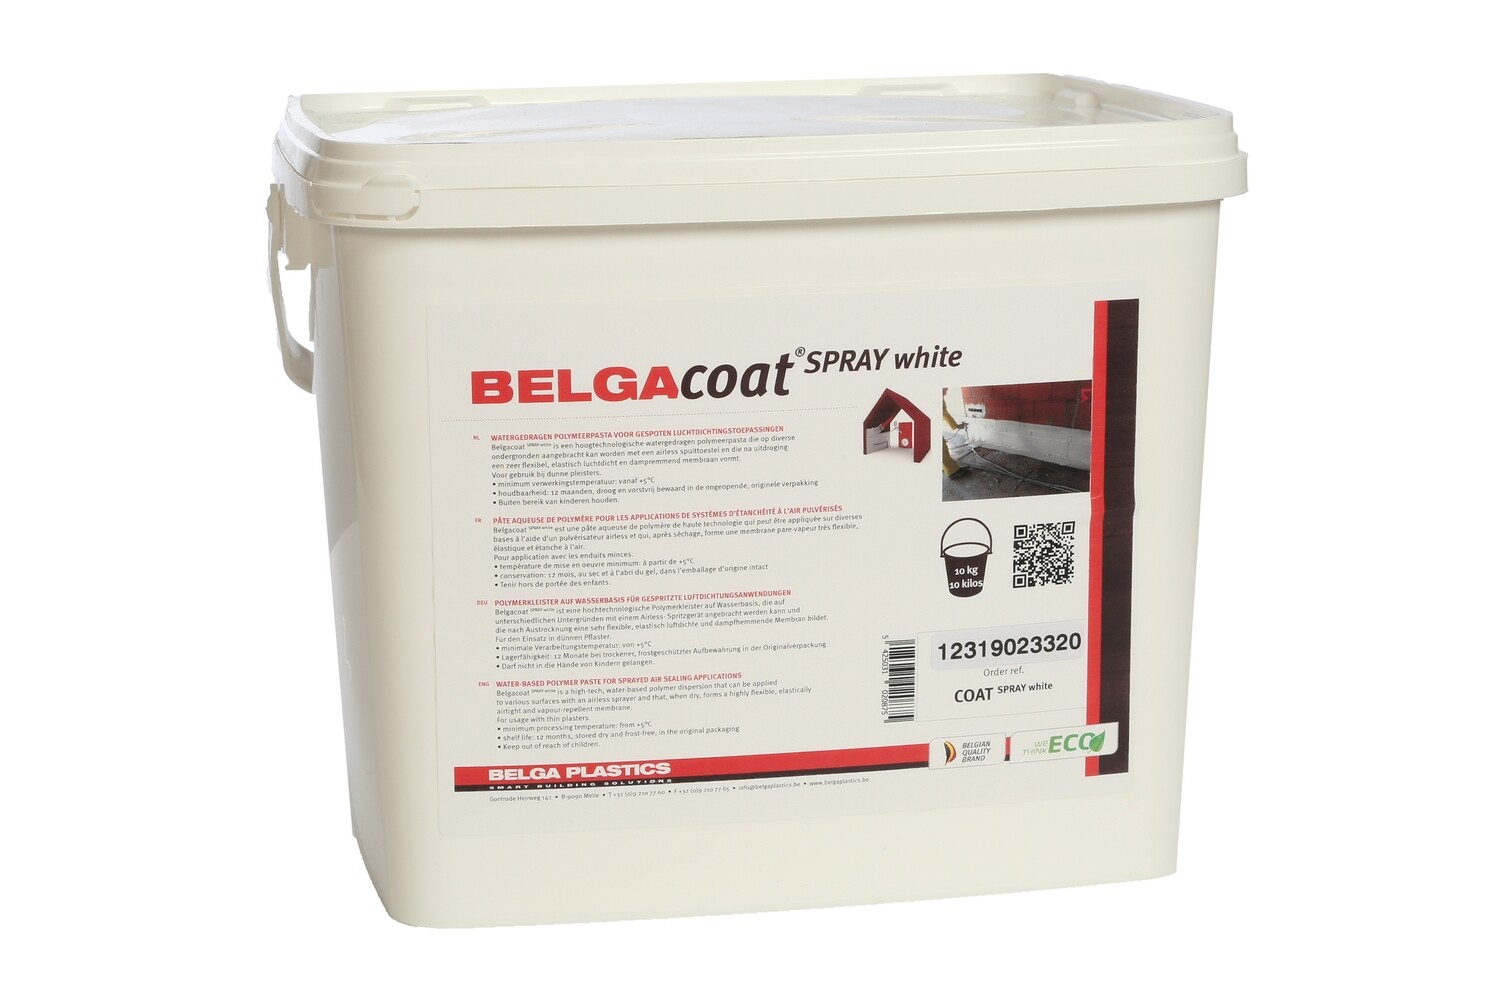 Belgacoat Spray white 10 liter, air tight paint